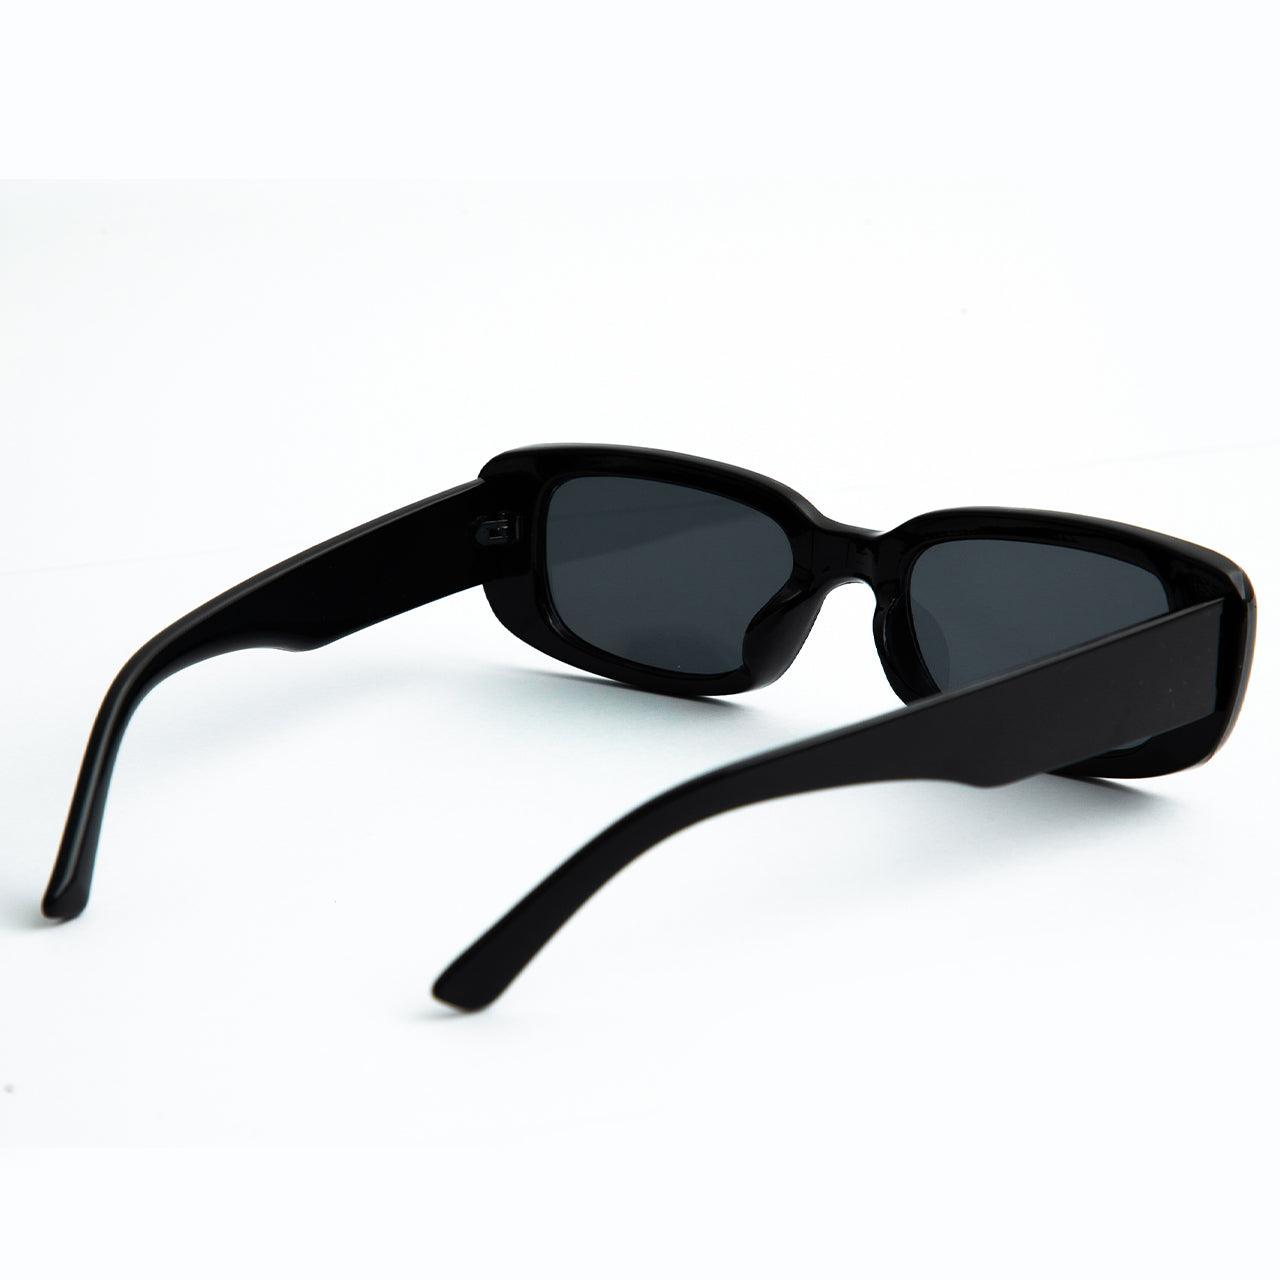 Black Rounded Rectangle Sunglasses